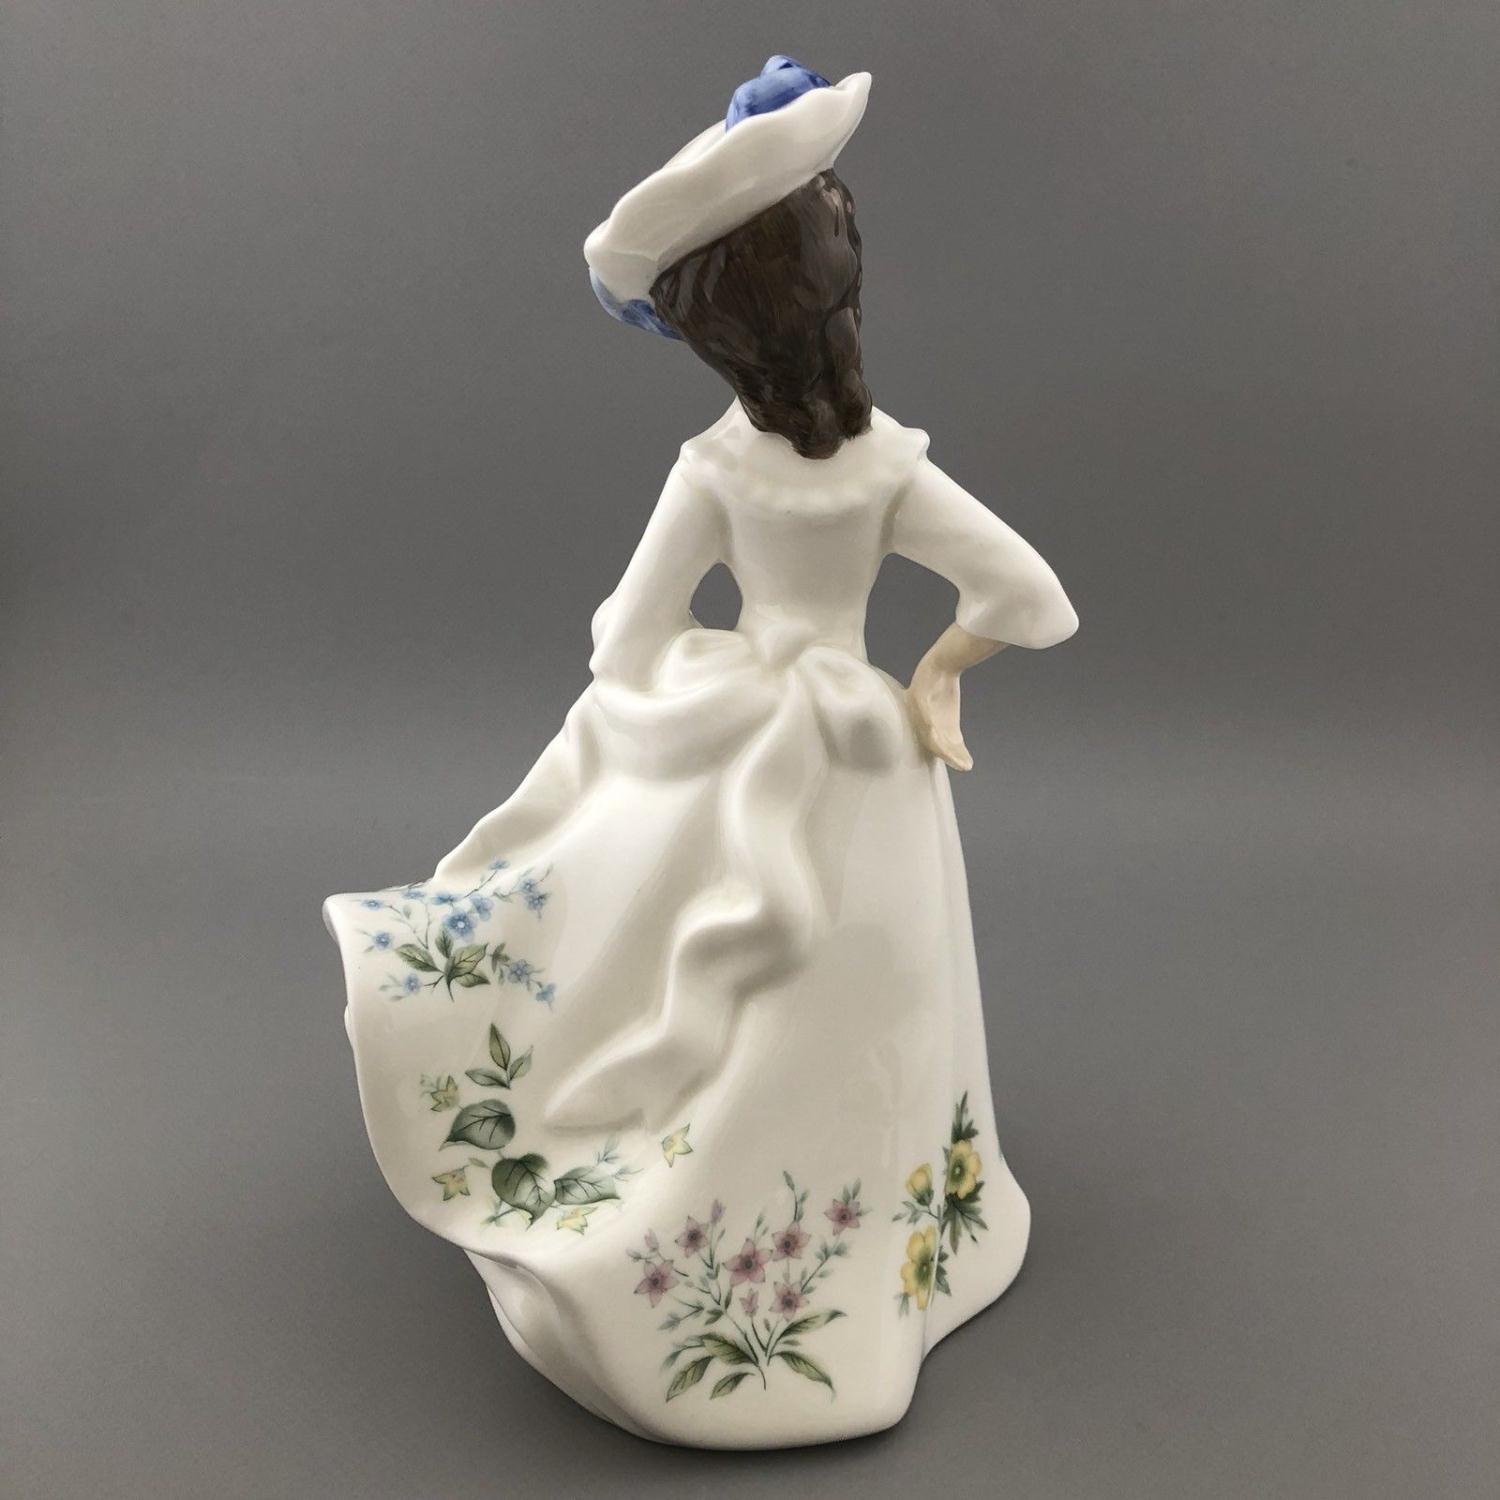 Royal Doulton Porcelain Figurine "Adele" HN2480 Pretty Lady - Image 5 of 7